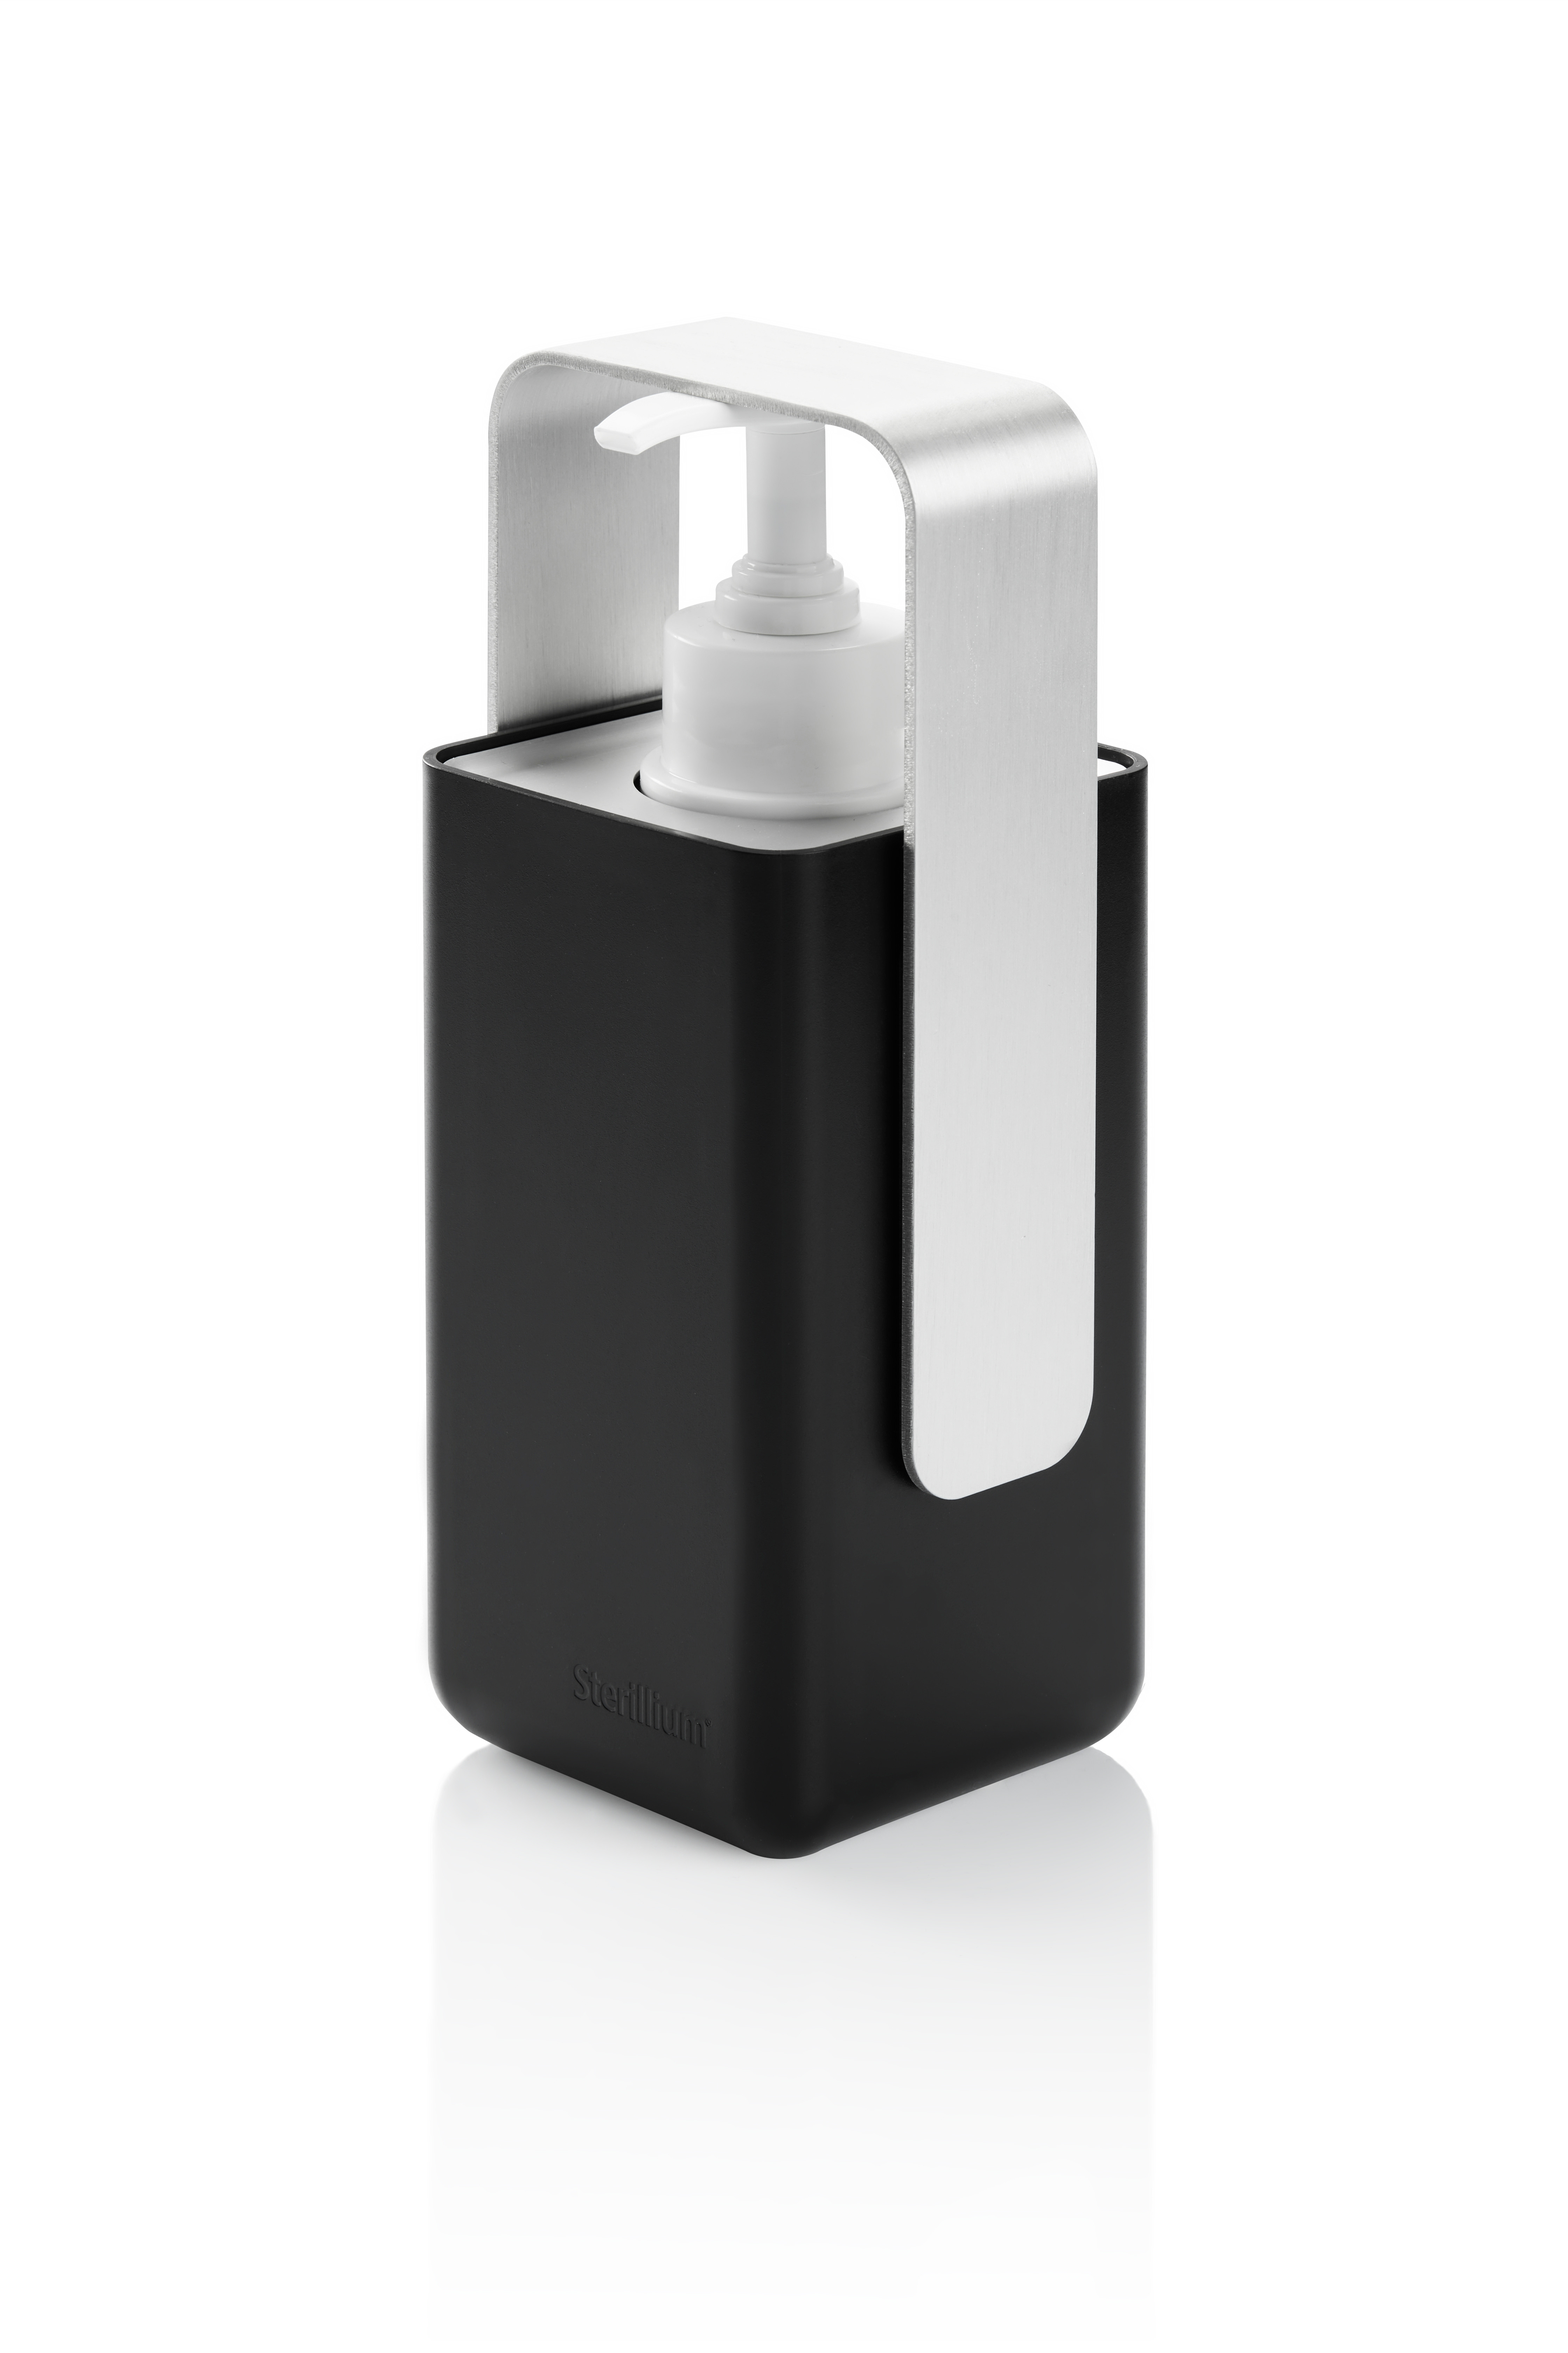 HARTMANN Dispenser Leon Black 988355 475 ml